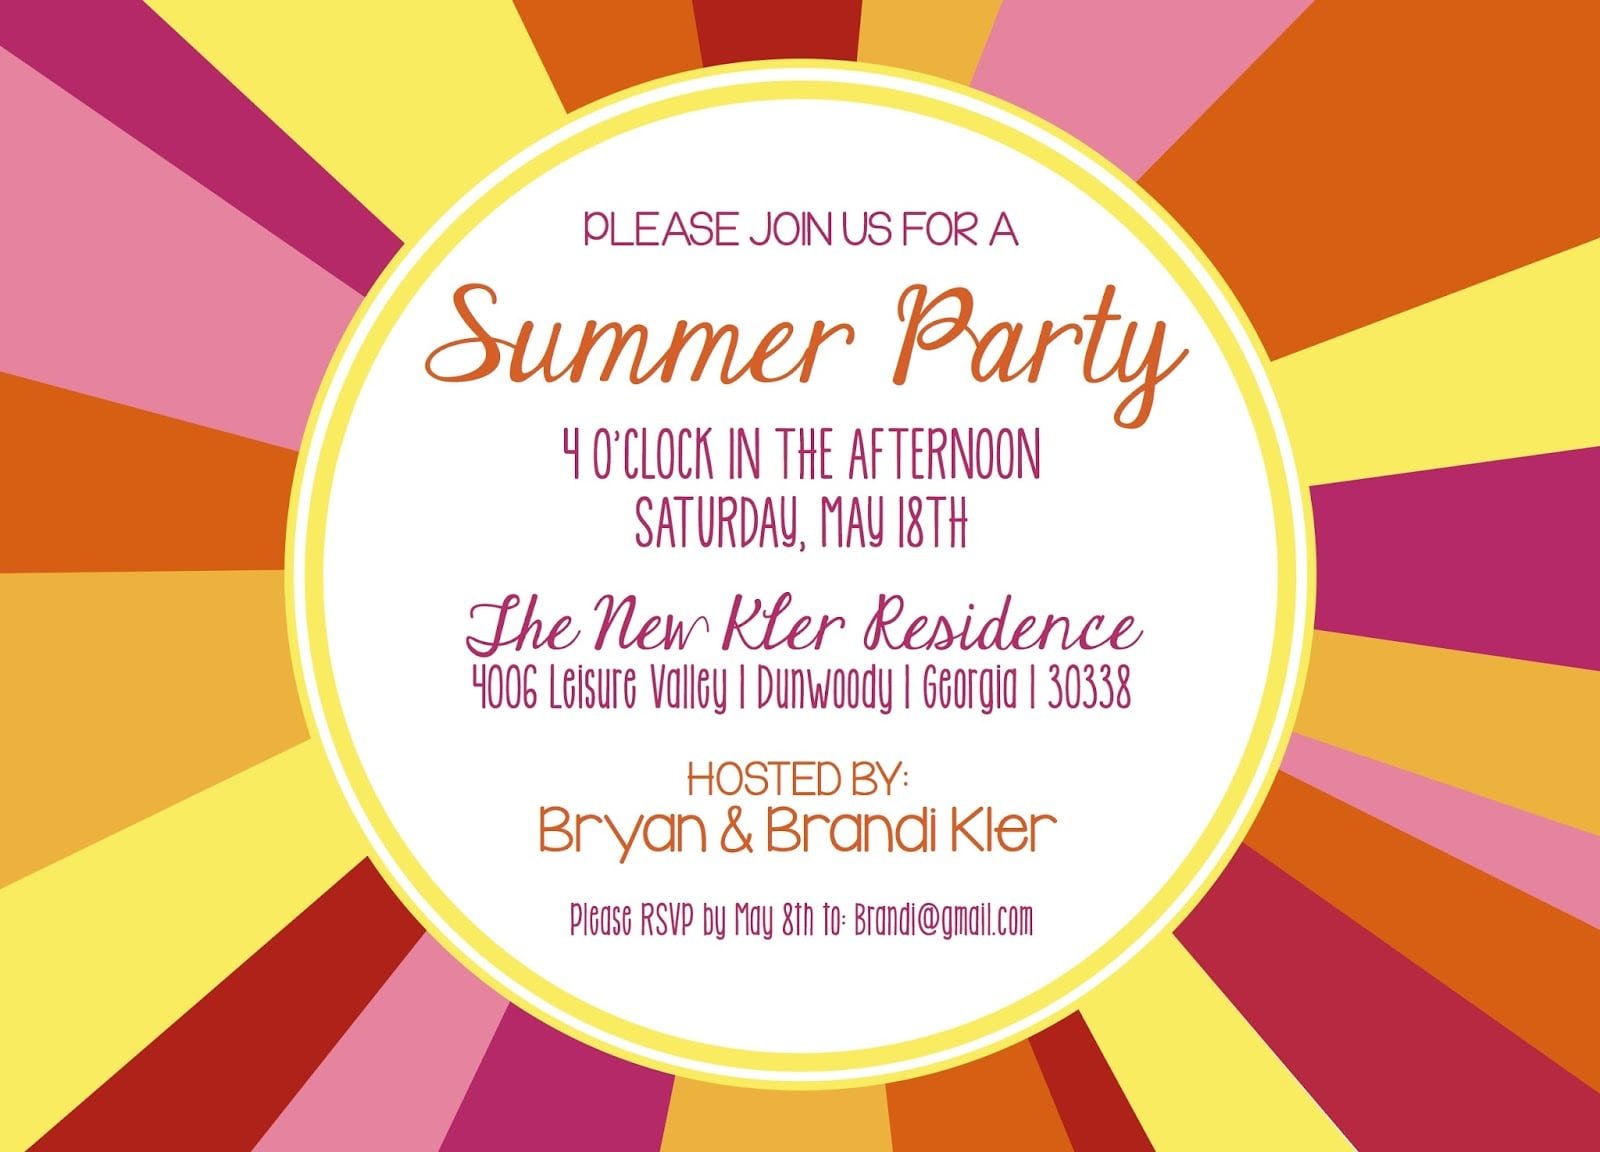 Summer Party Invitations